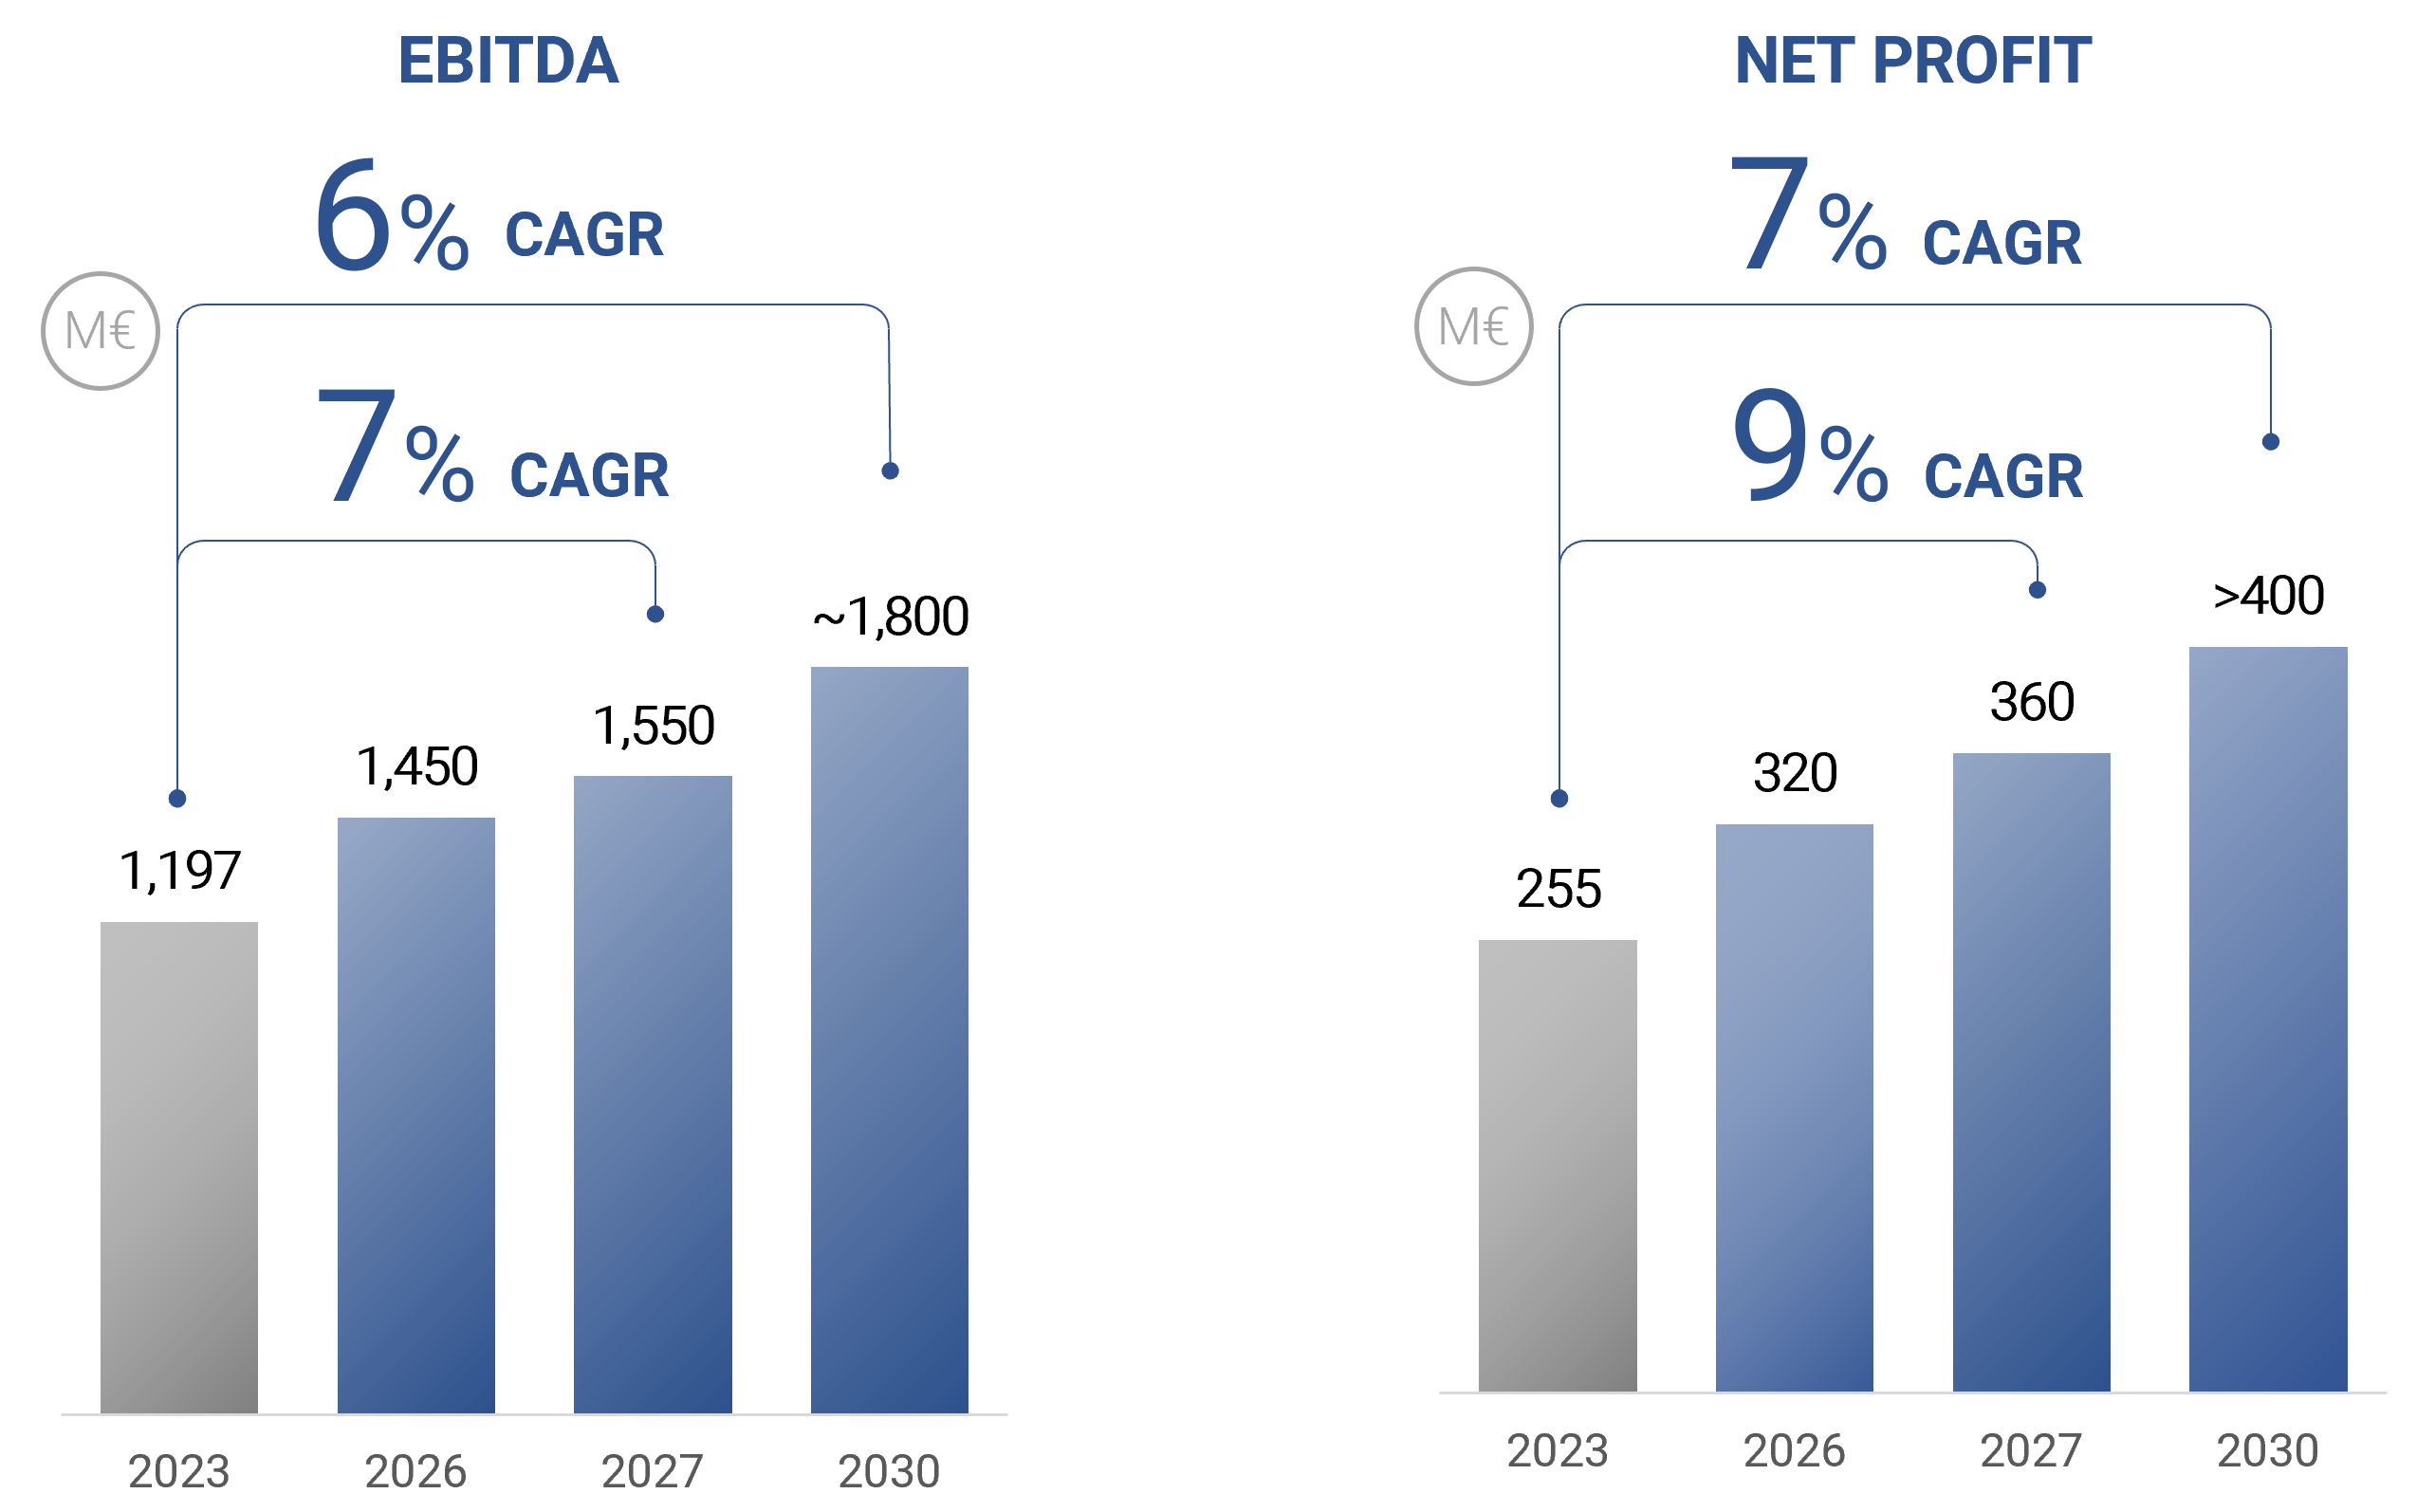 ebitda and net profit growth